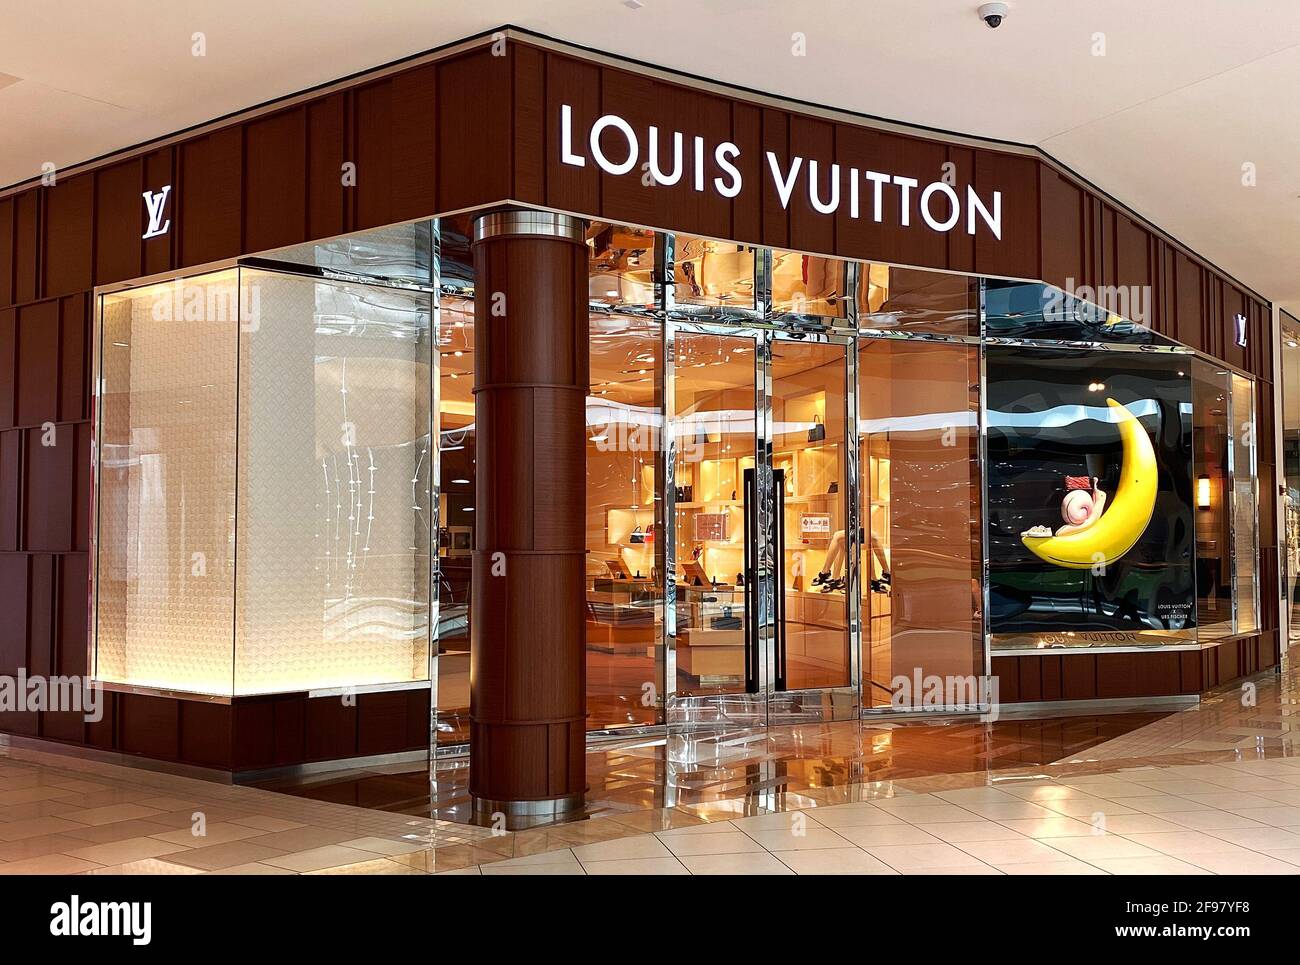 Louis Vuitton Aventura Bloomingdale's - Aventura, FL